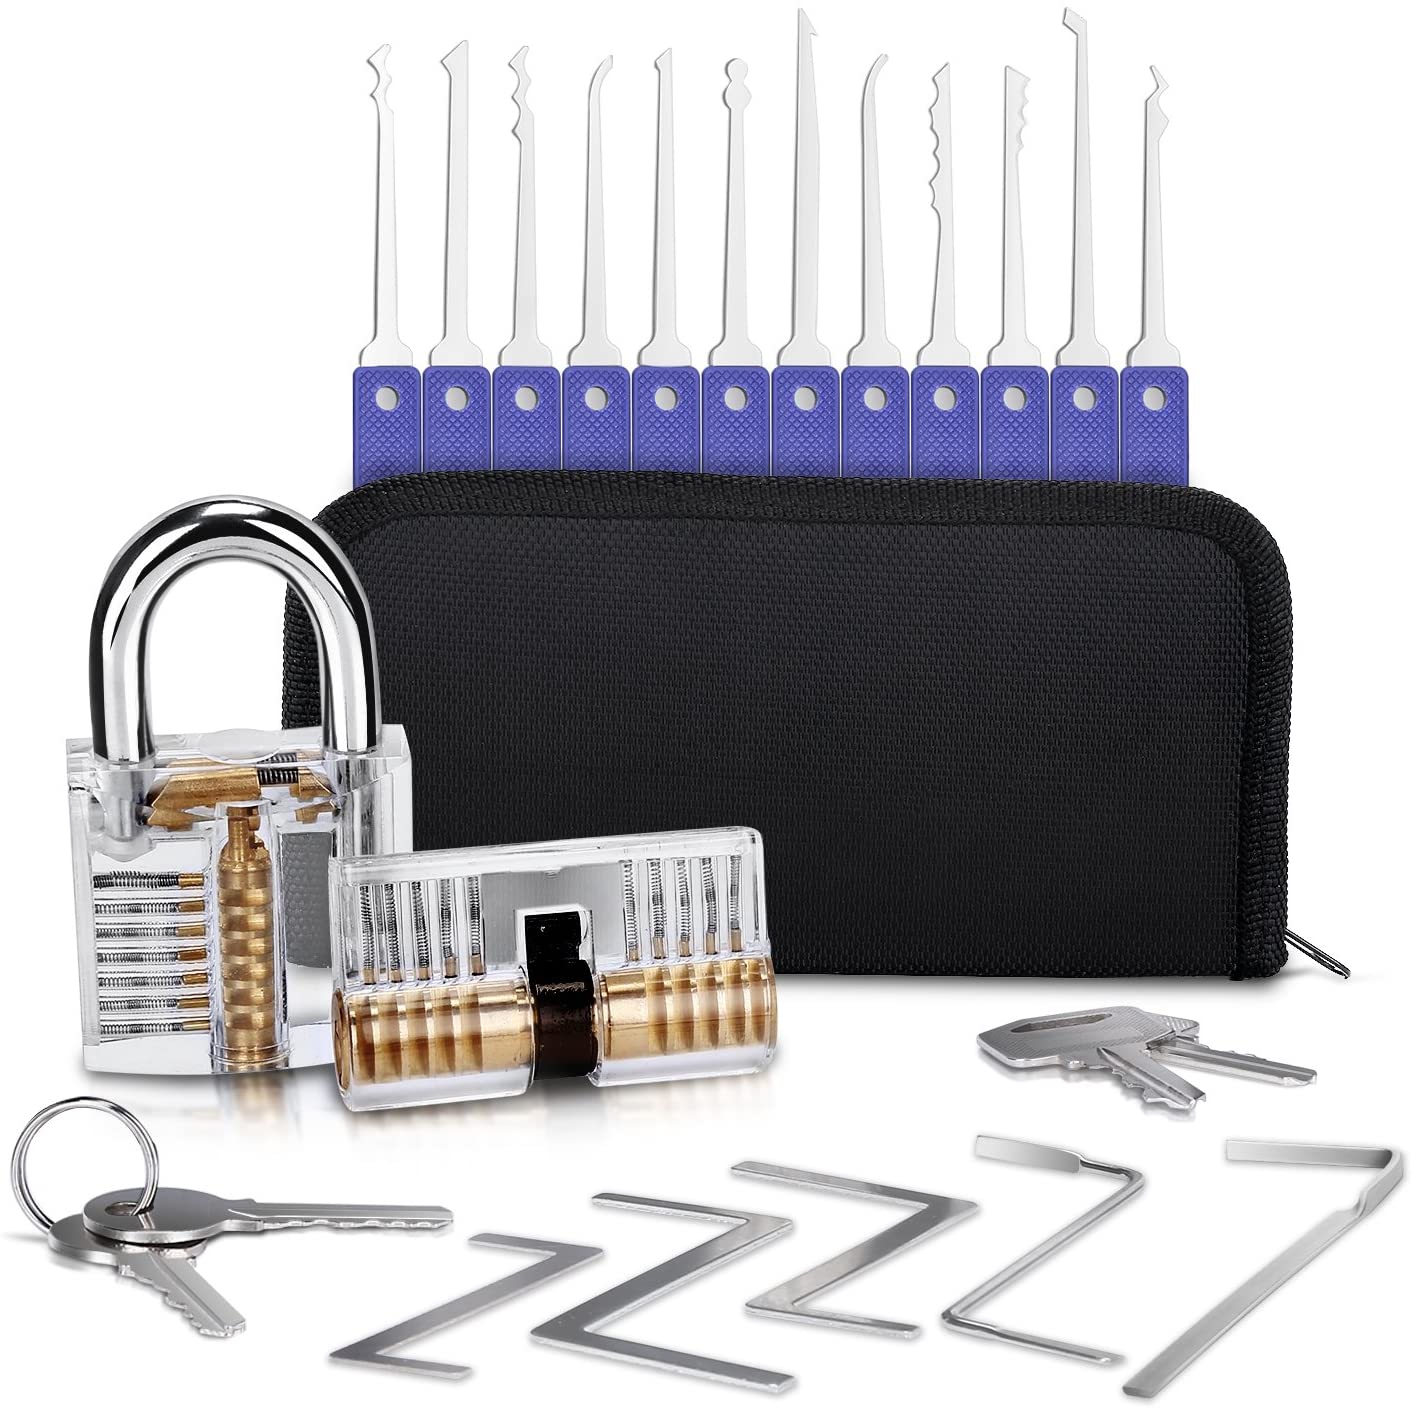 24 Pieces Lock Pick Tool Kit and 2 Transparent Practice Locks